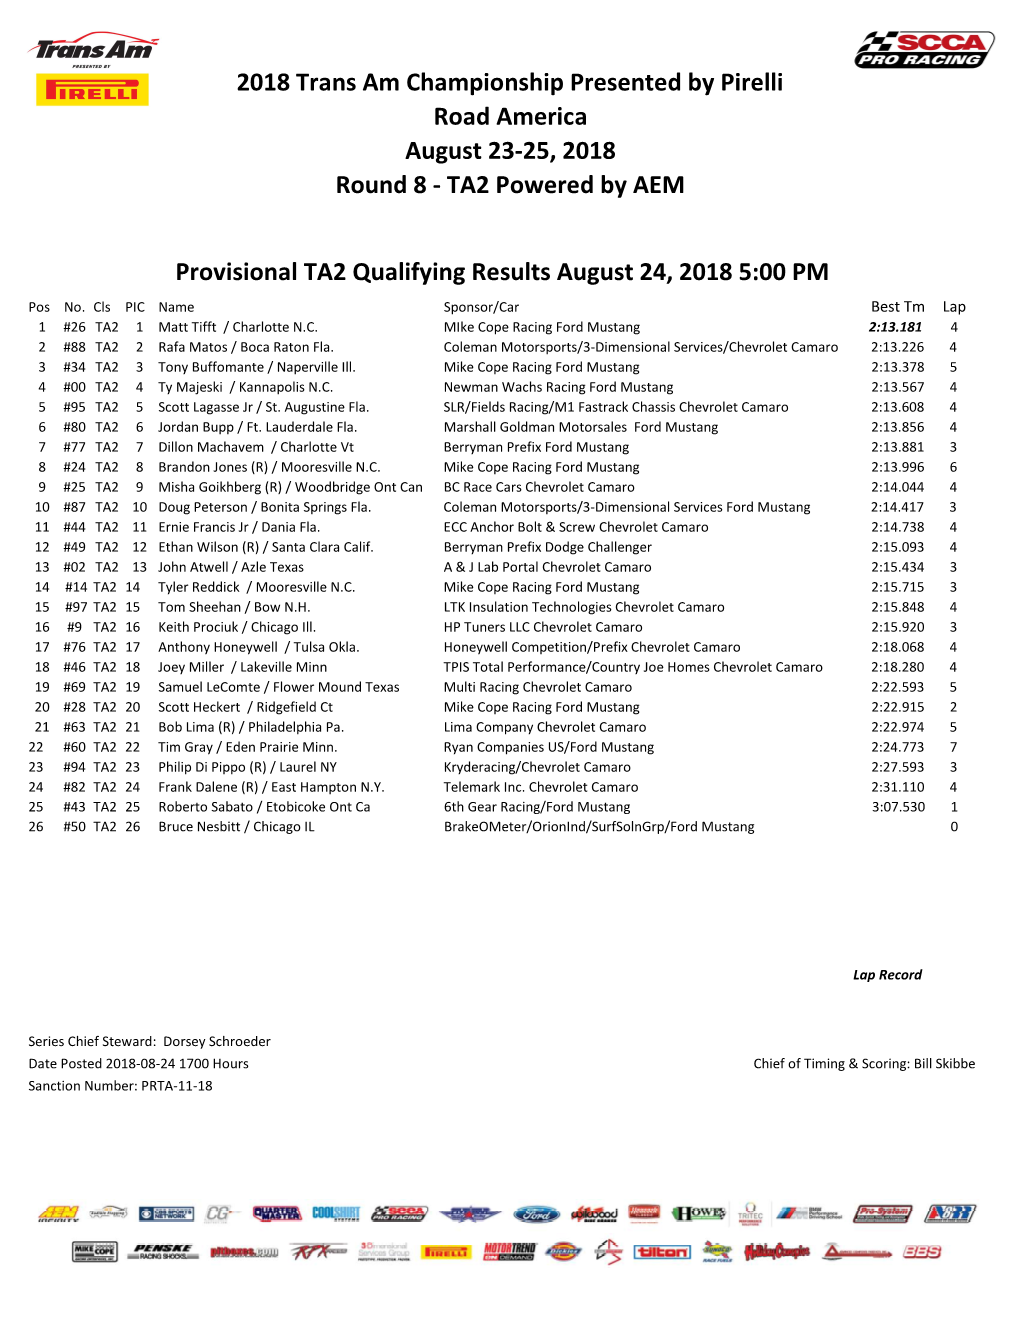 Provisional TA2 Qualifying Results August 24, 2018 5:00 PM Posno.Clspicname Sponsor/Car Best Tm Lap 1 #26 TA2 1 Matt Tifft / Charlotte N.C